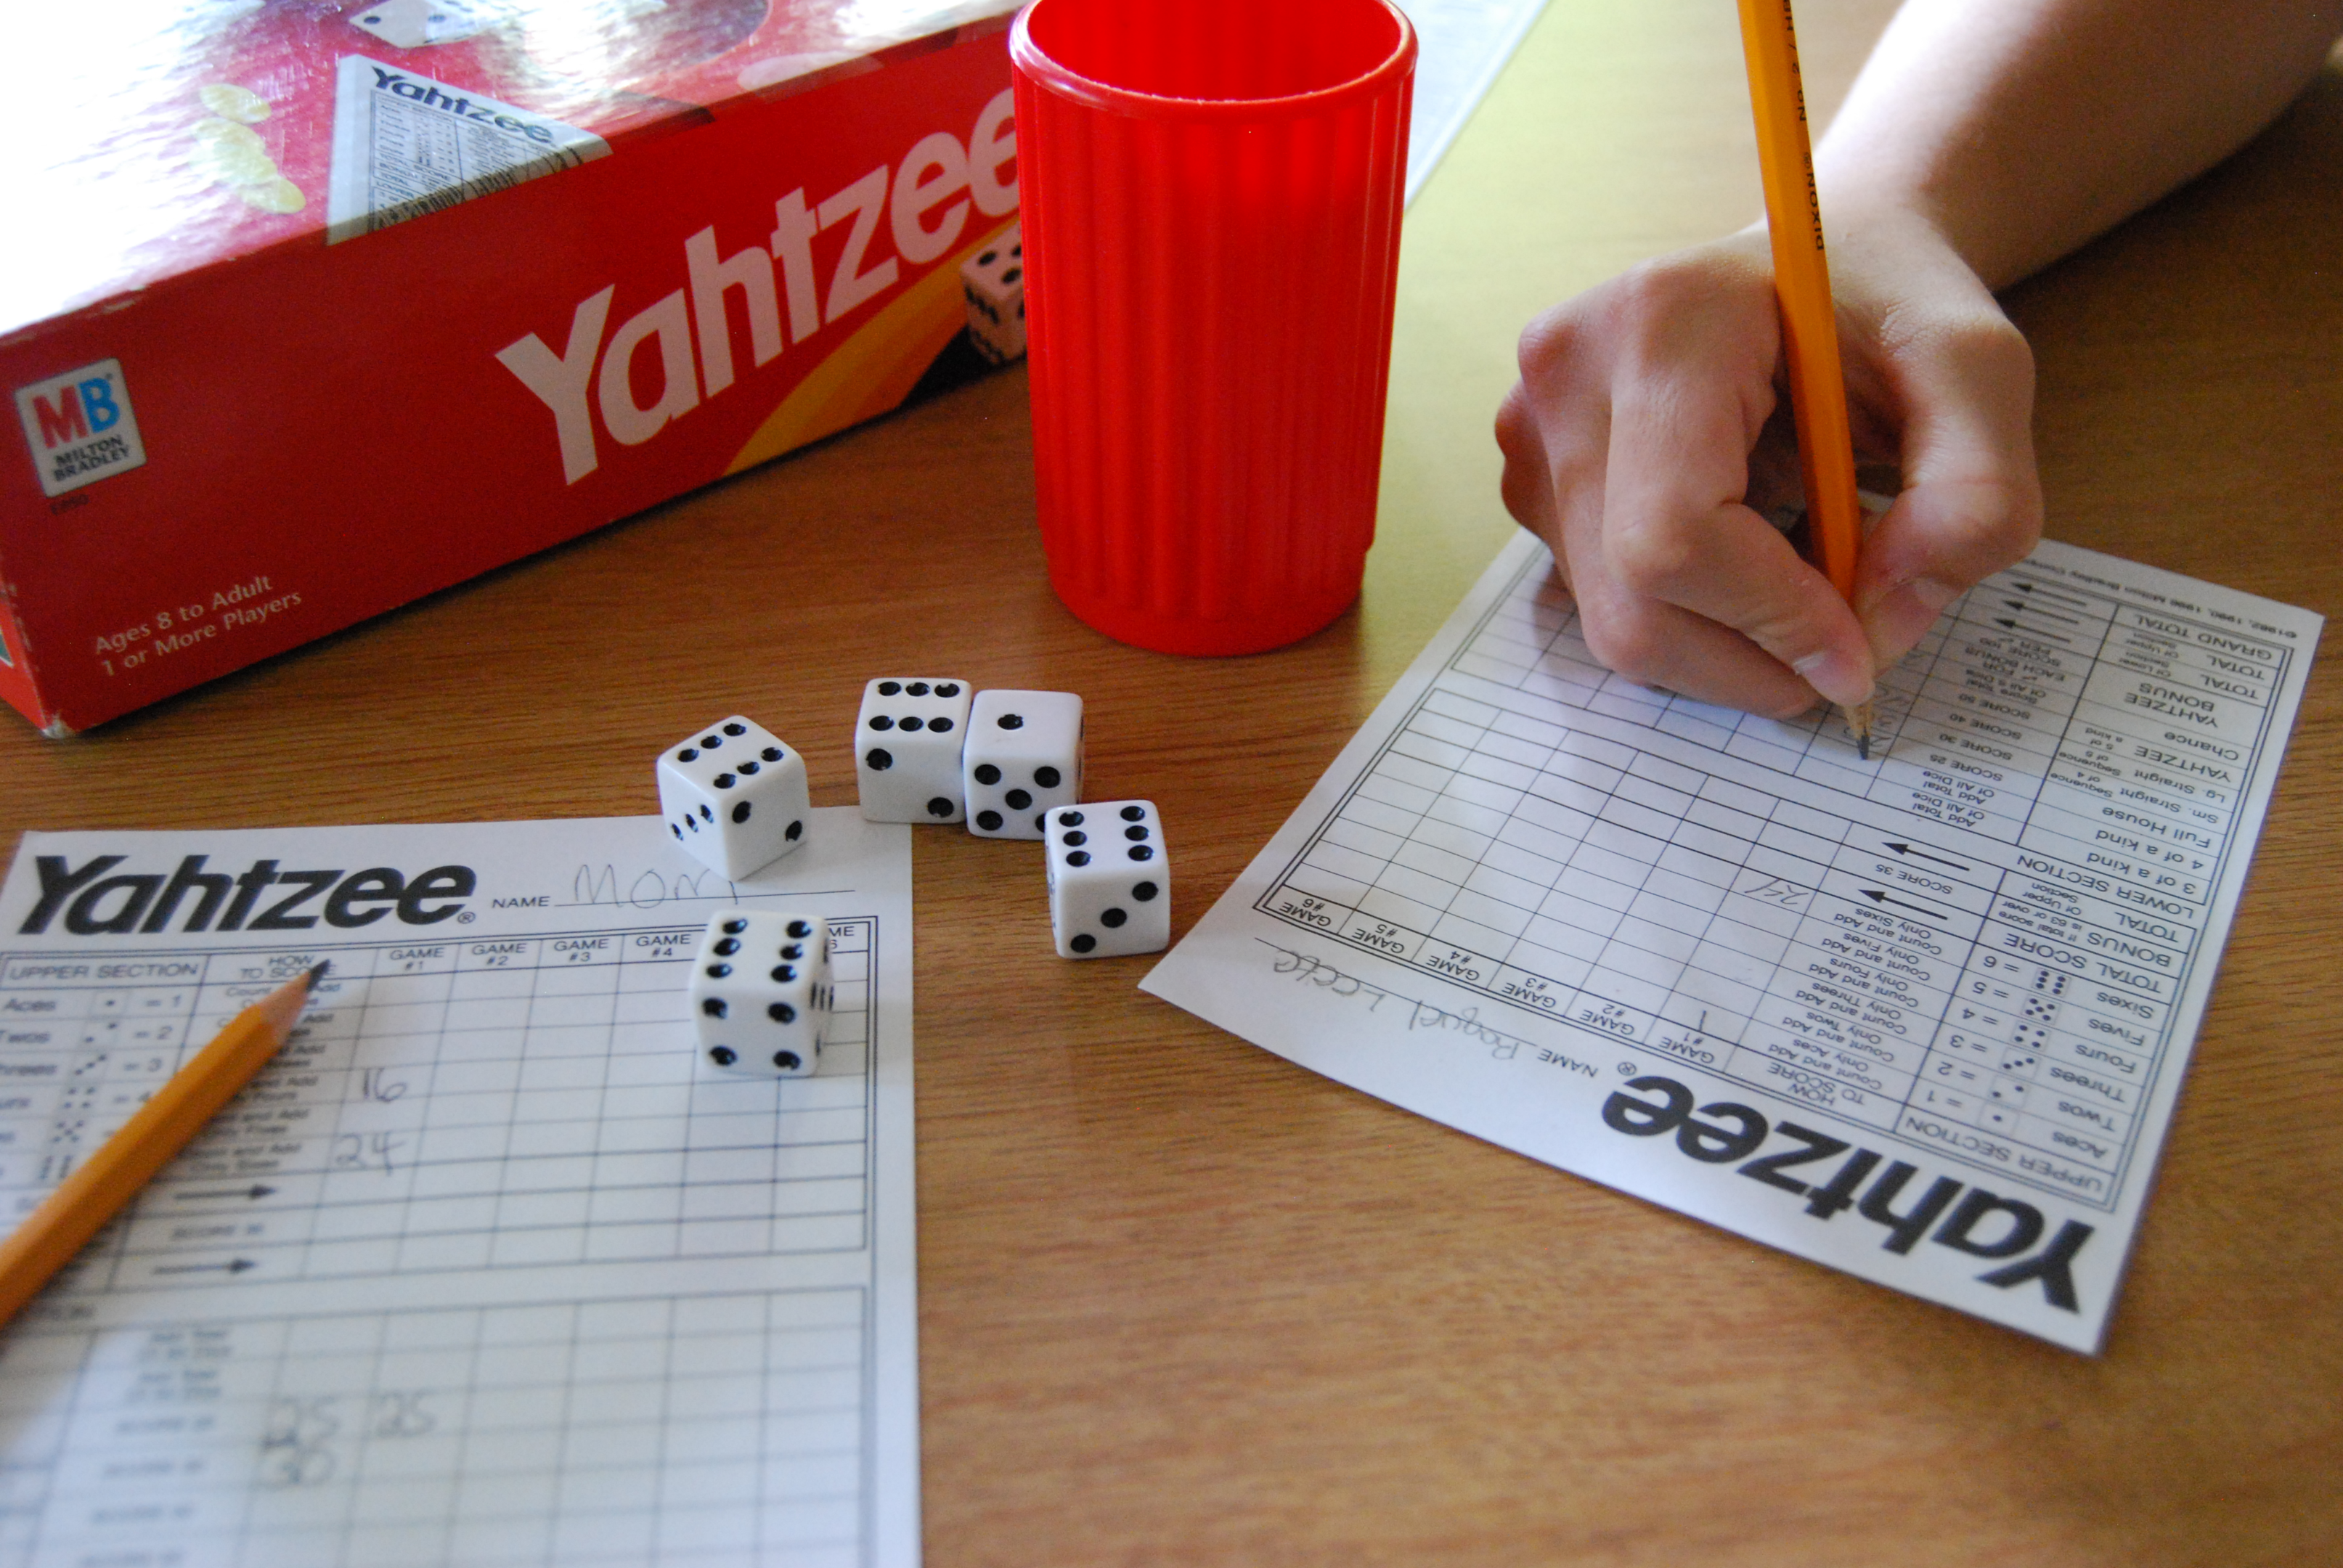 Yahtzee, same dice roll game